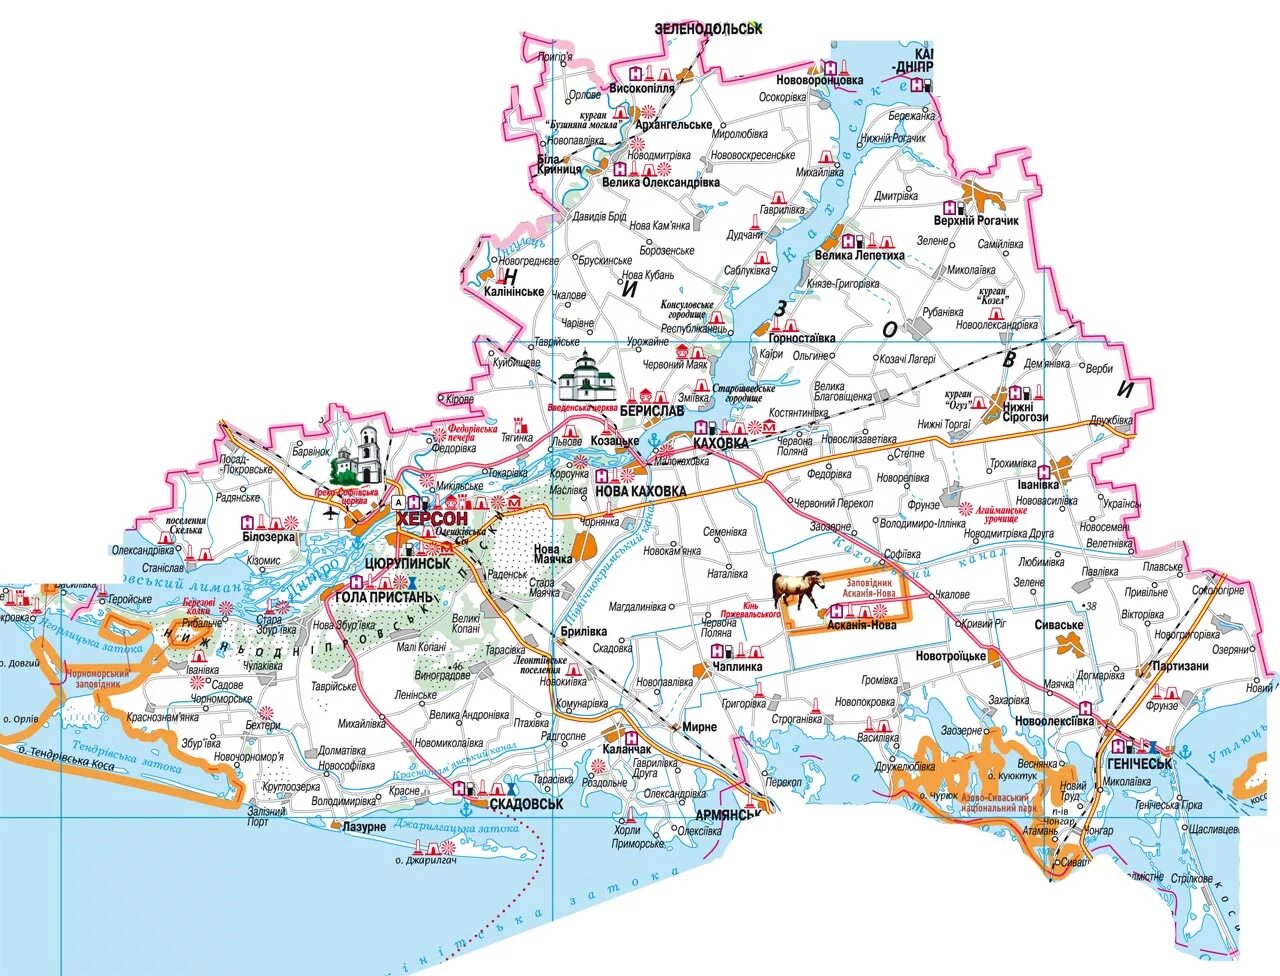 Херсонская обл на карте Украины. Херсонская область на карте. Херсонская область Александровка карта подробная. Карта Херсонская область с населенными пунктами. Карта херсонской области на сегодня